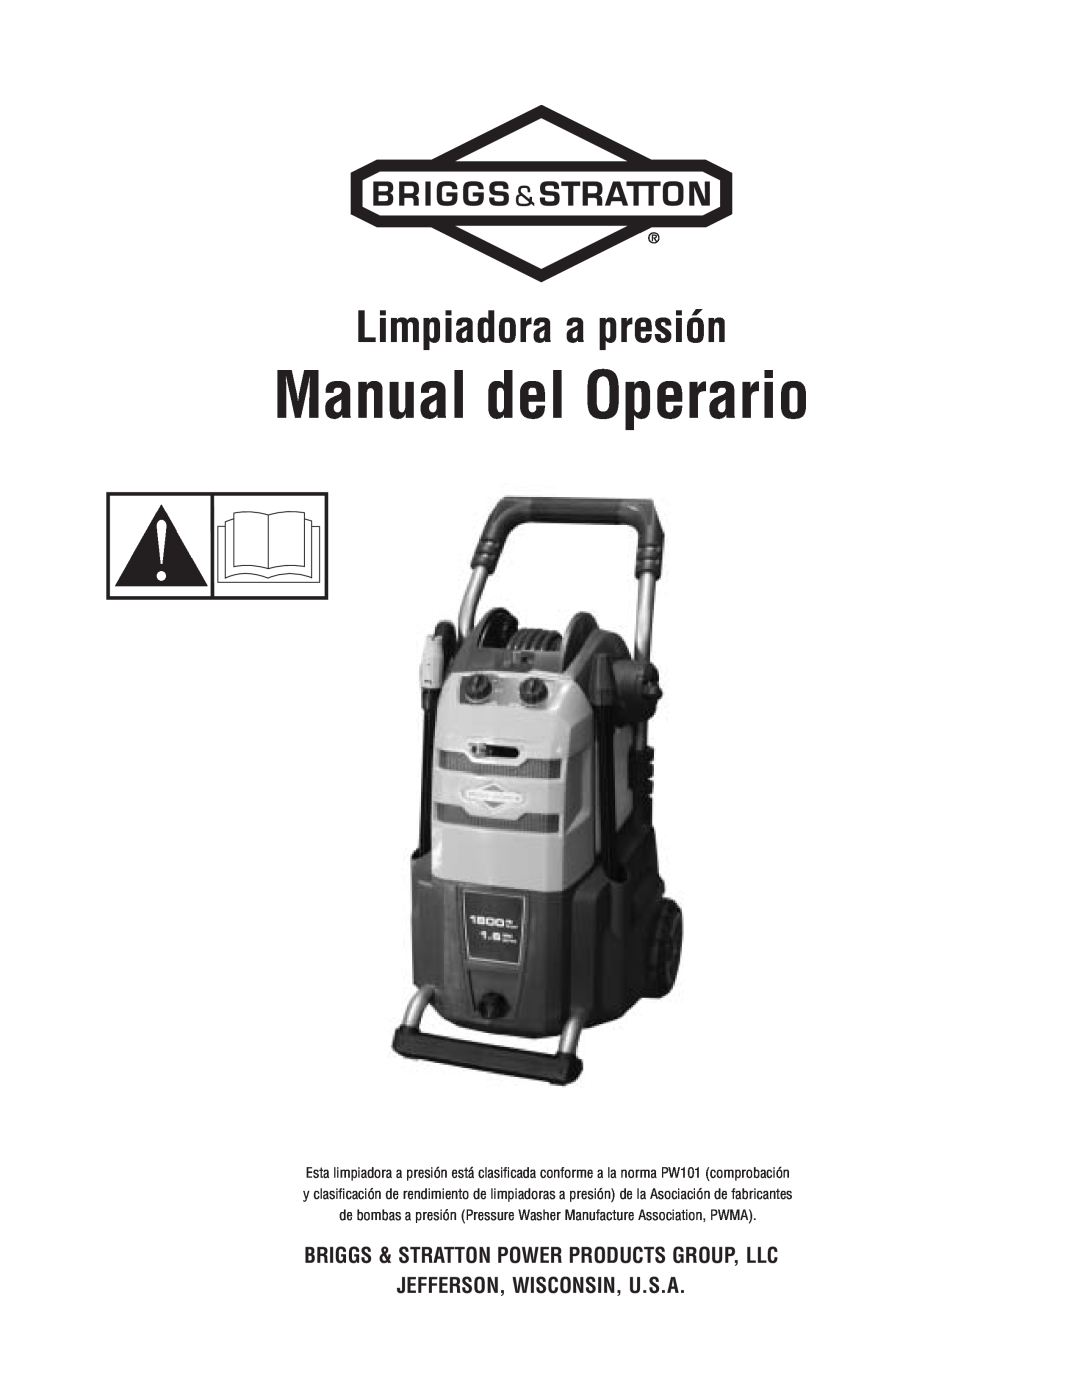 Briggs & Stratton Electric Pressure Washer manual Manual del Operario, Limpiadora a presión, Jefferson, Wisconsin, U.S.A 